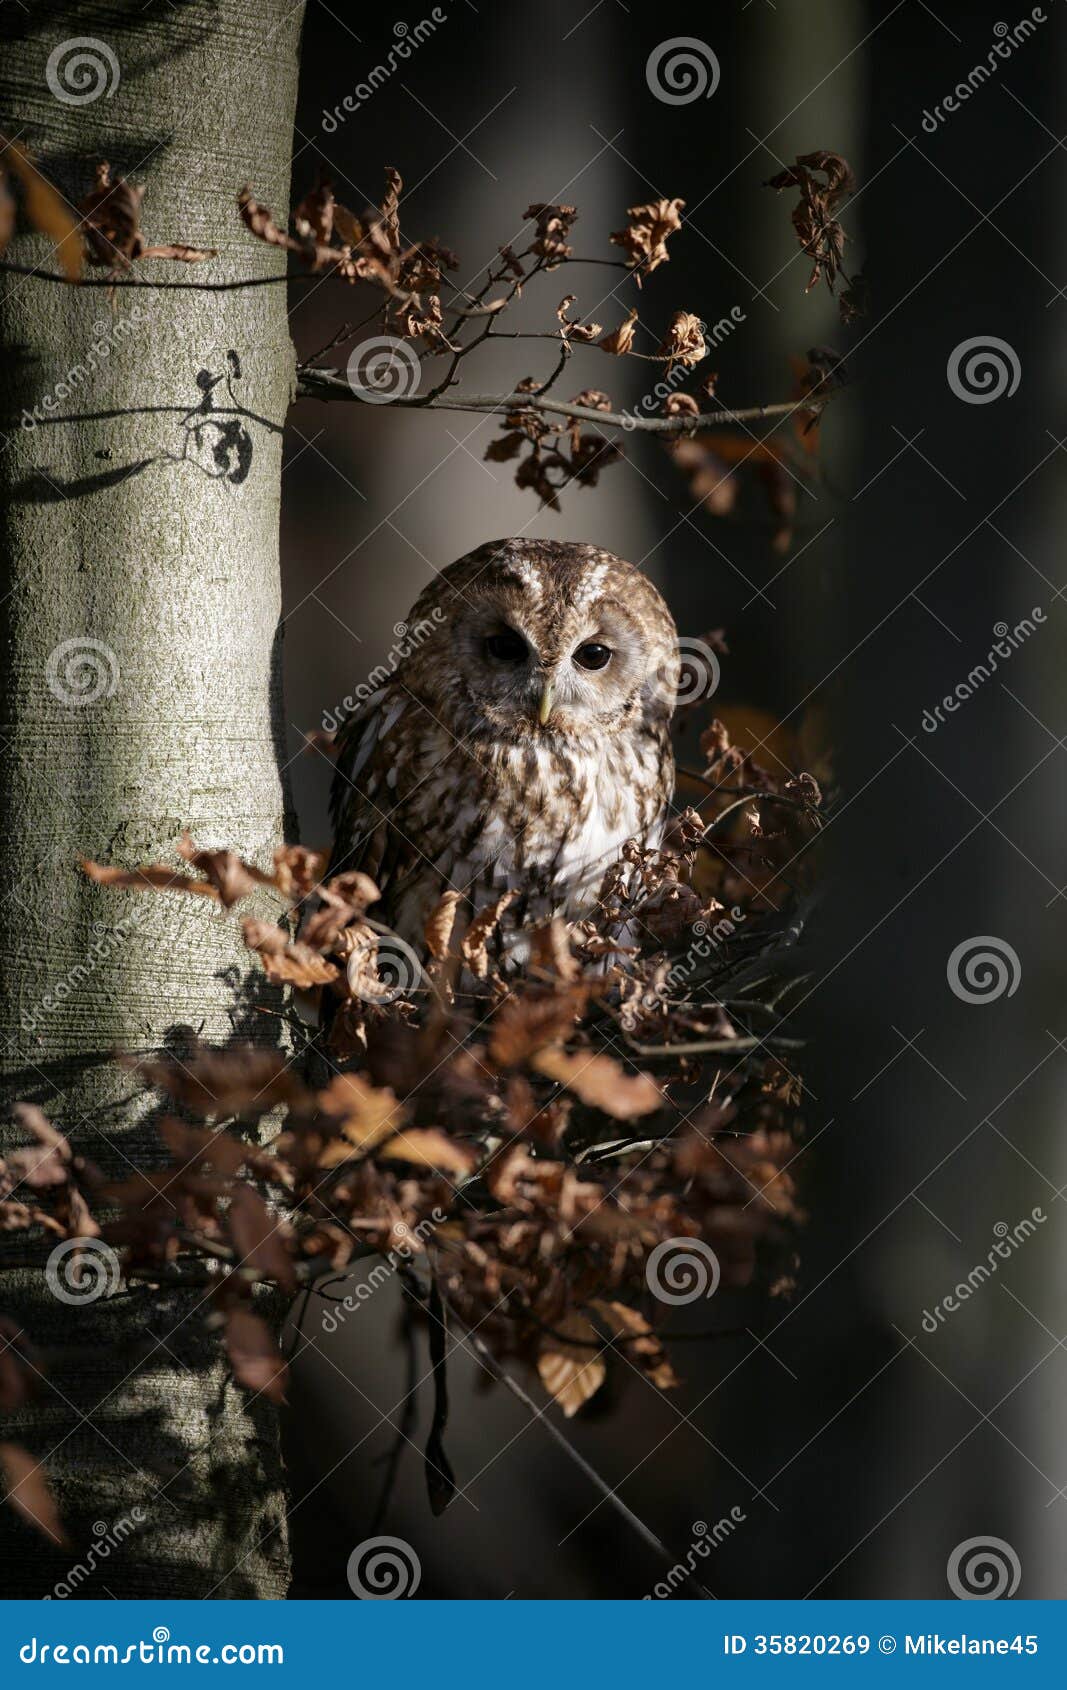 Tawny owl, Strix aluco, single bird on branch